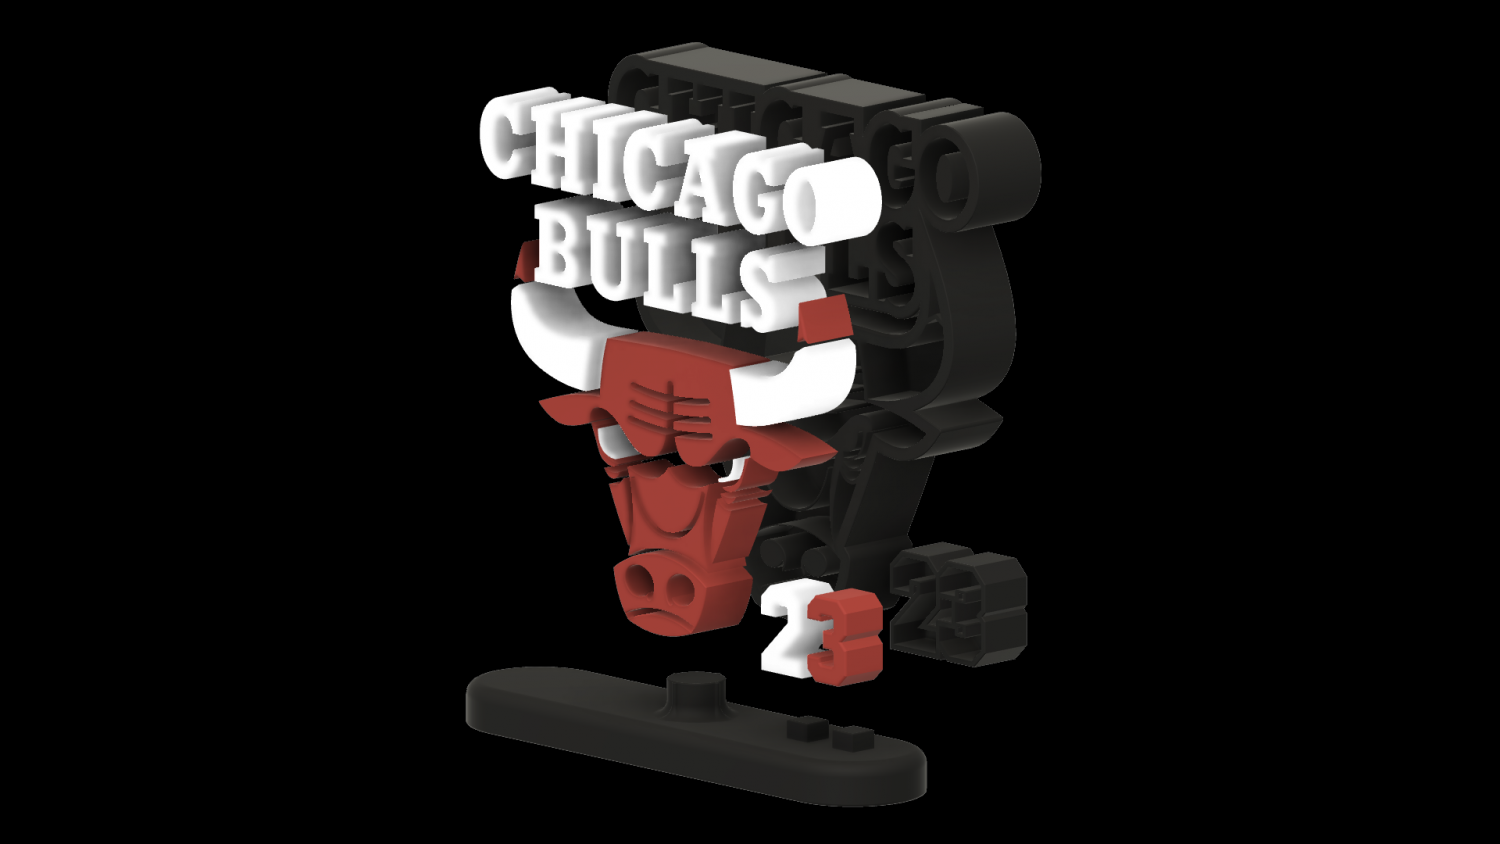 Chicago Bulls Michael Jordan 23 Nba Basketball Team Logo 3d